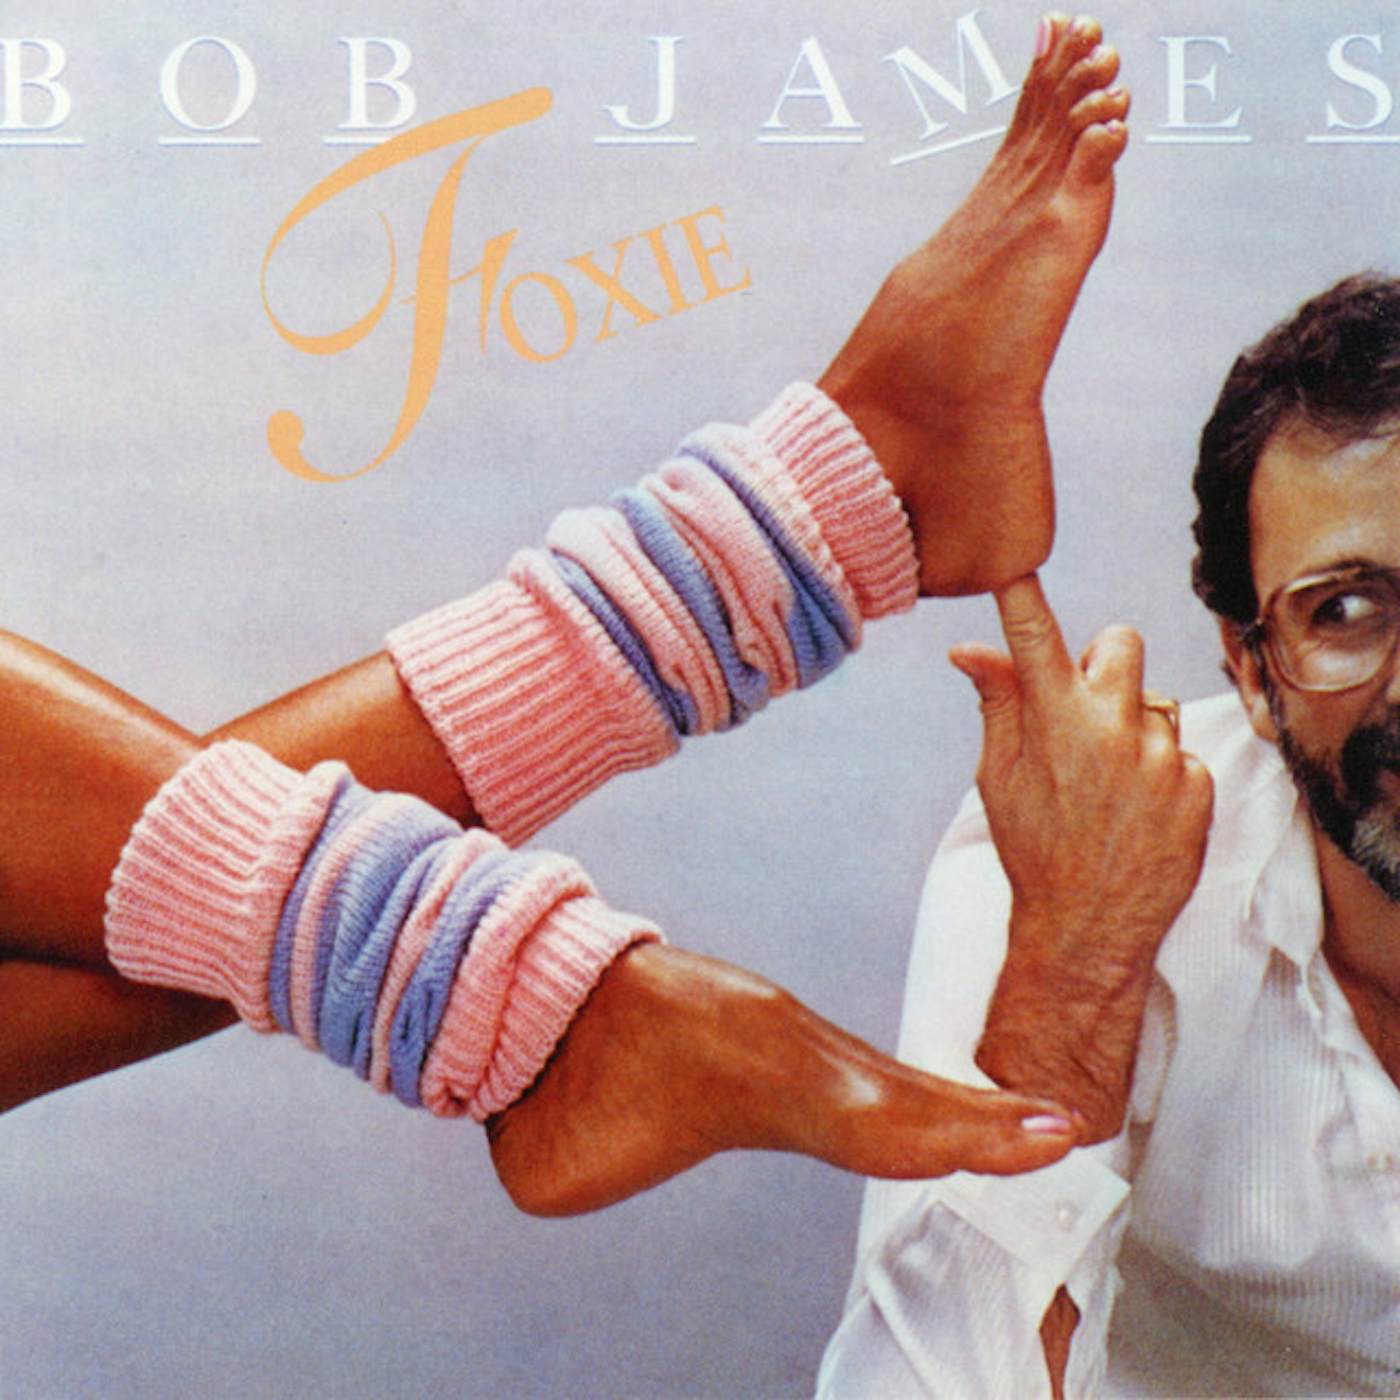 Bob James FOXIE CD